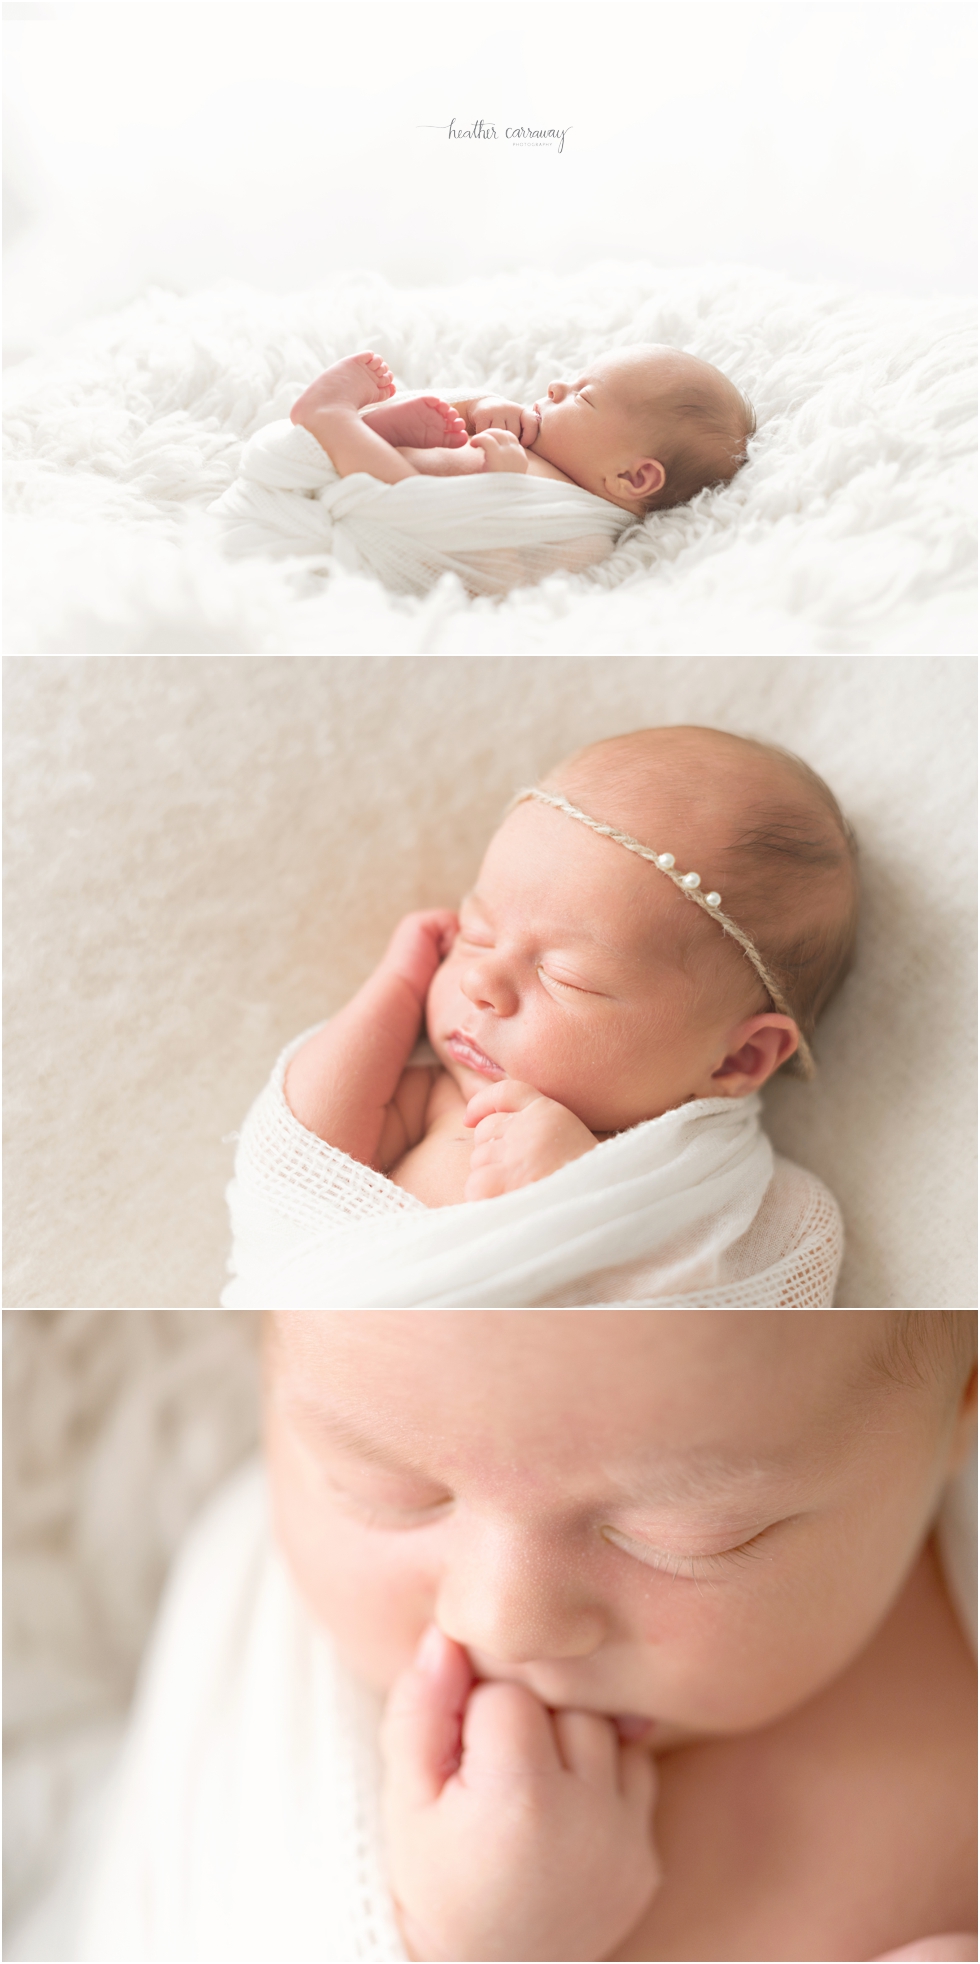 atlanta newborn photographer, roswell newborn photographer, heather carraway photography